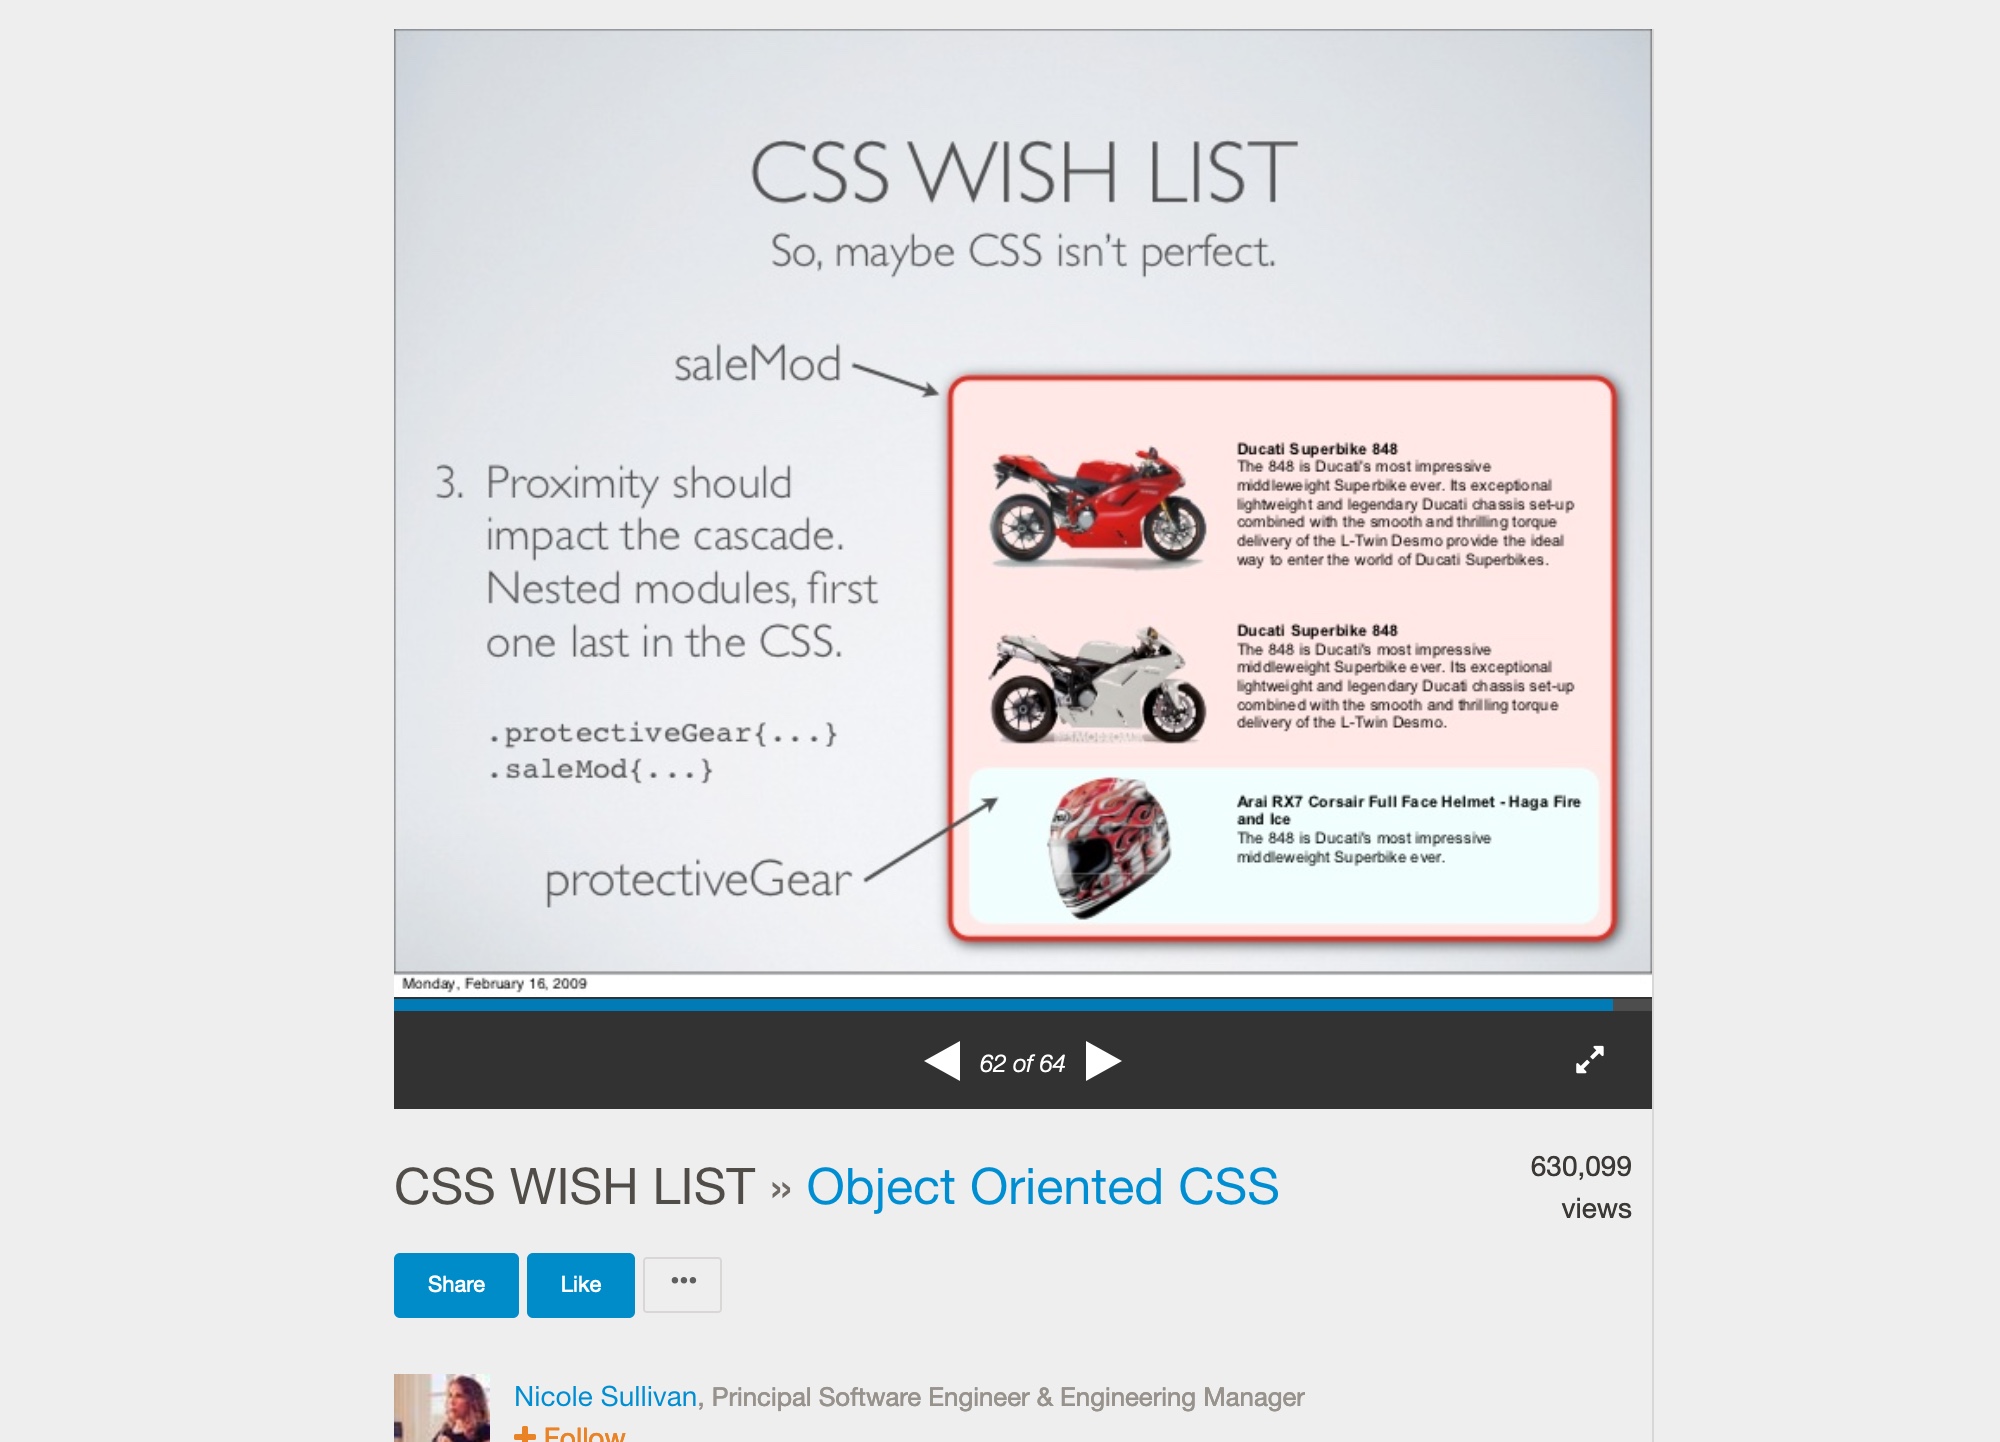 CSS Wishlist:
Proximity should impact the cascade
